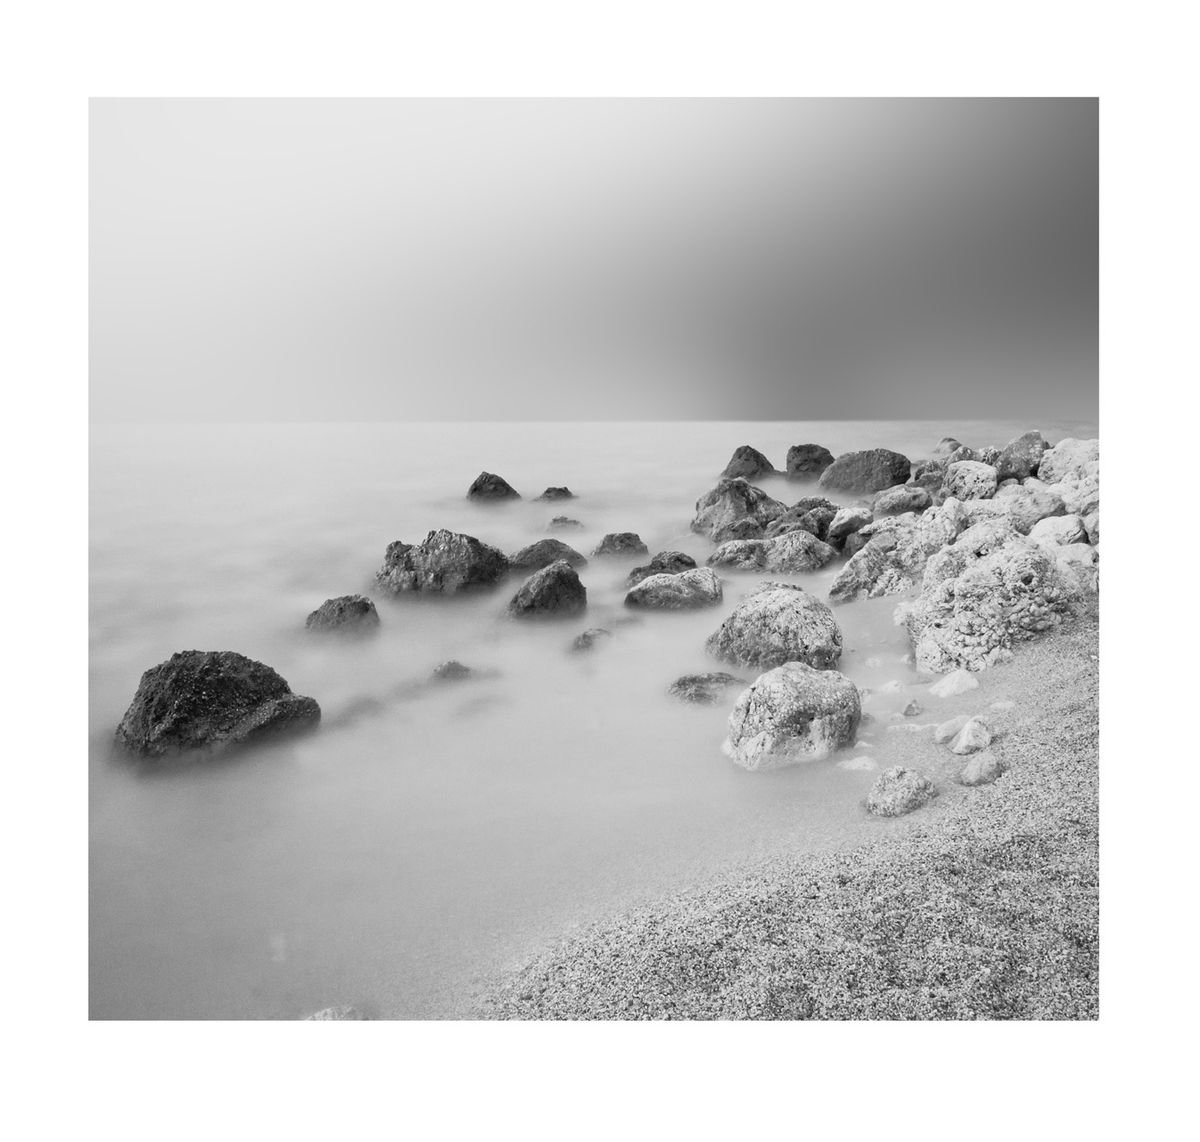 Landscape Rocks SeaScape | Contemplating the silence by Carmelita Iezzi